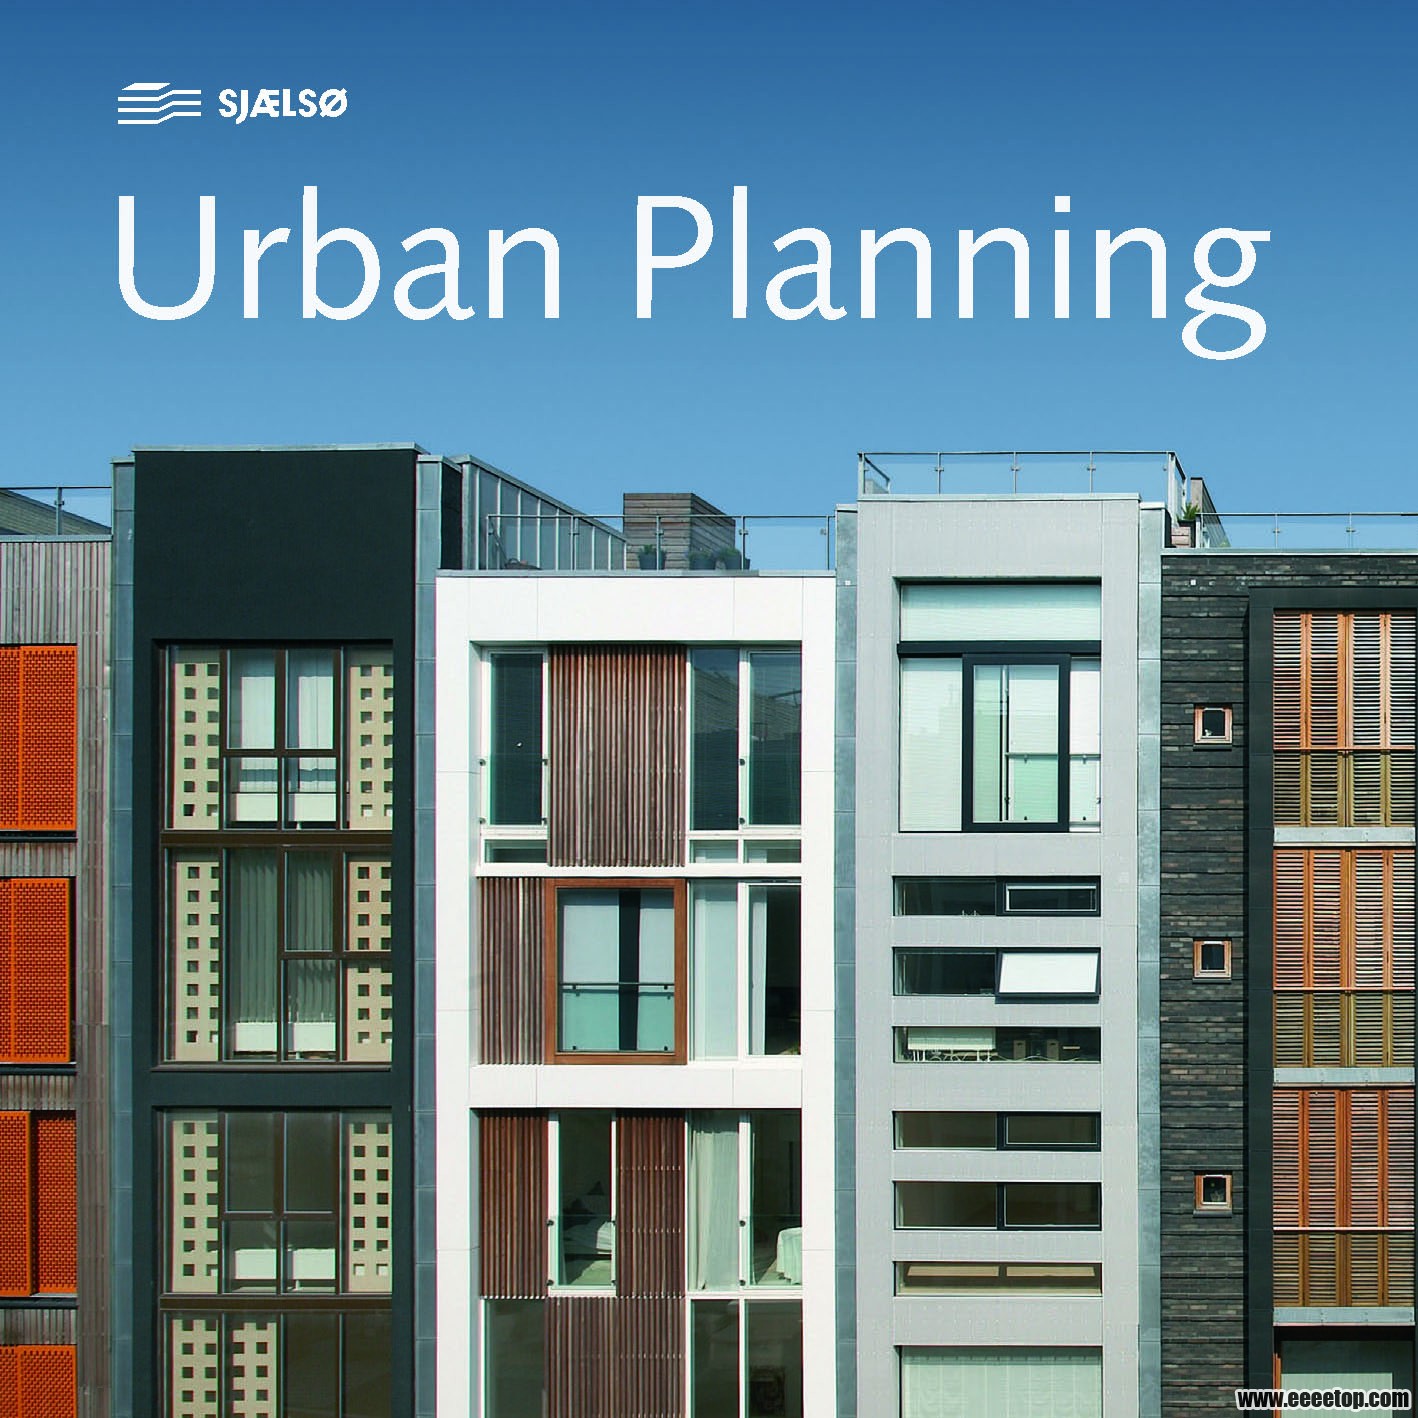 0.Urban Planning.jpg